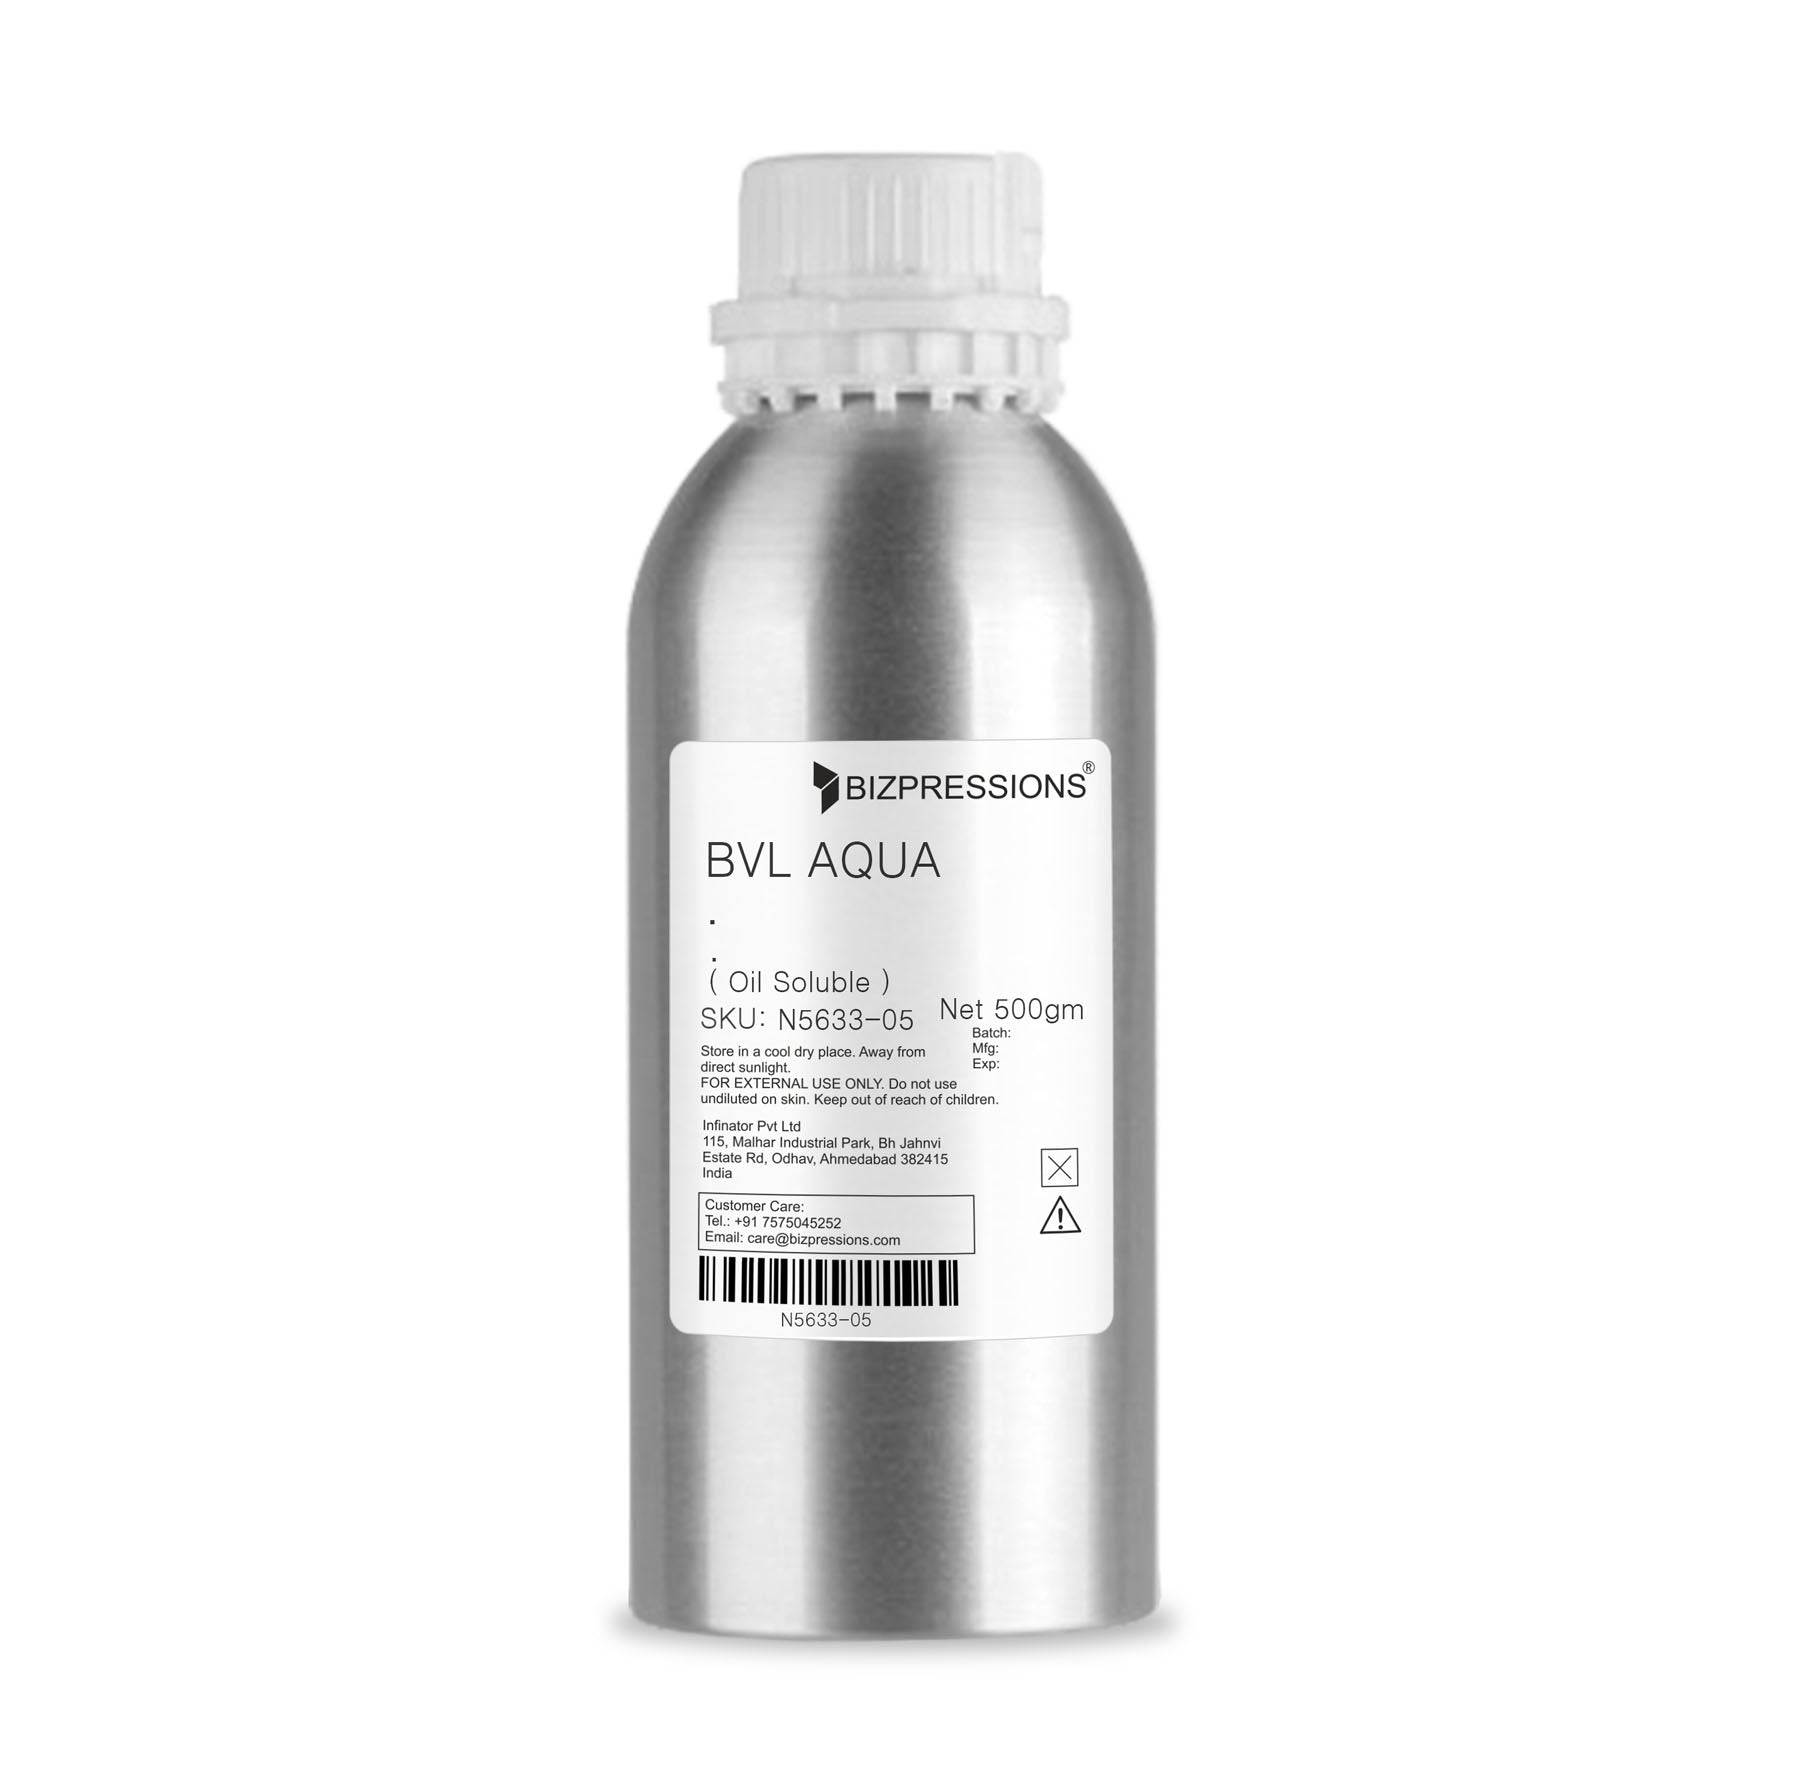 BVL AQUA - Fragrance ( Oil Soluble ) - 500 gm